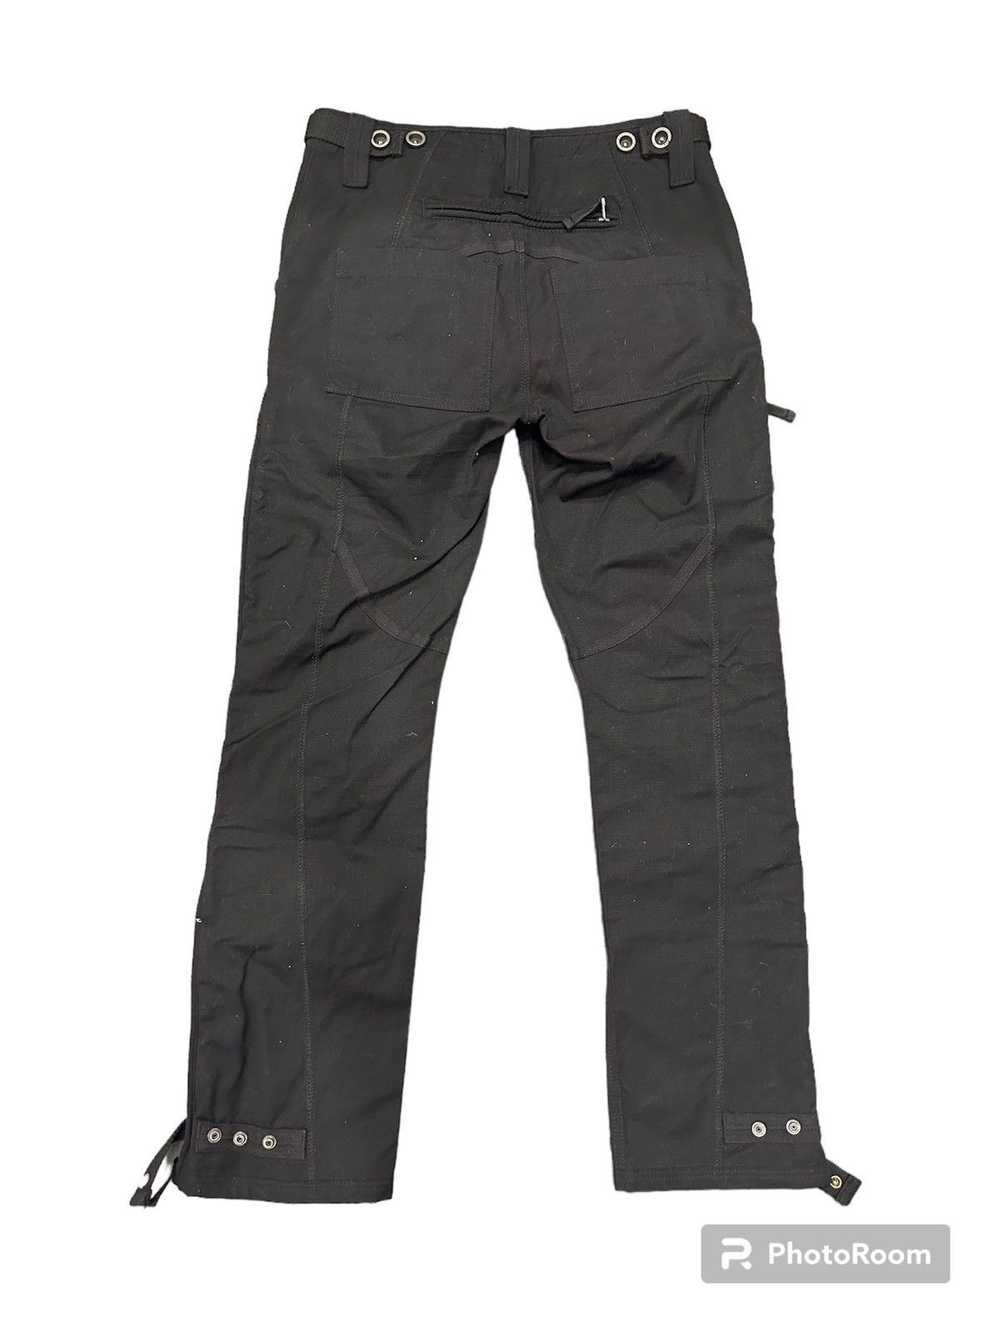 Kody Phillips Kody Phillips zipper pants size 30 - image 2